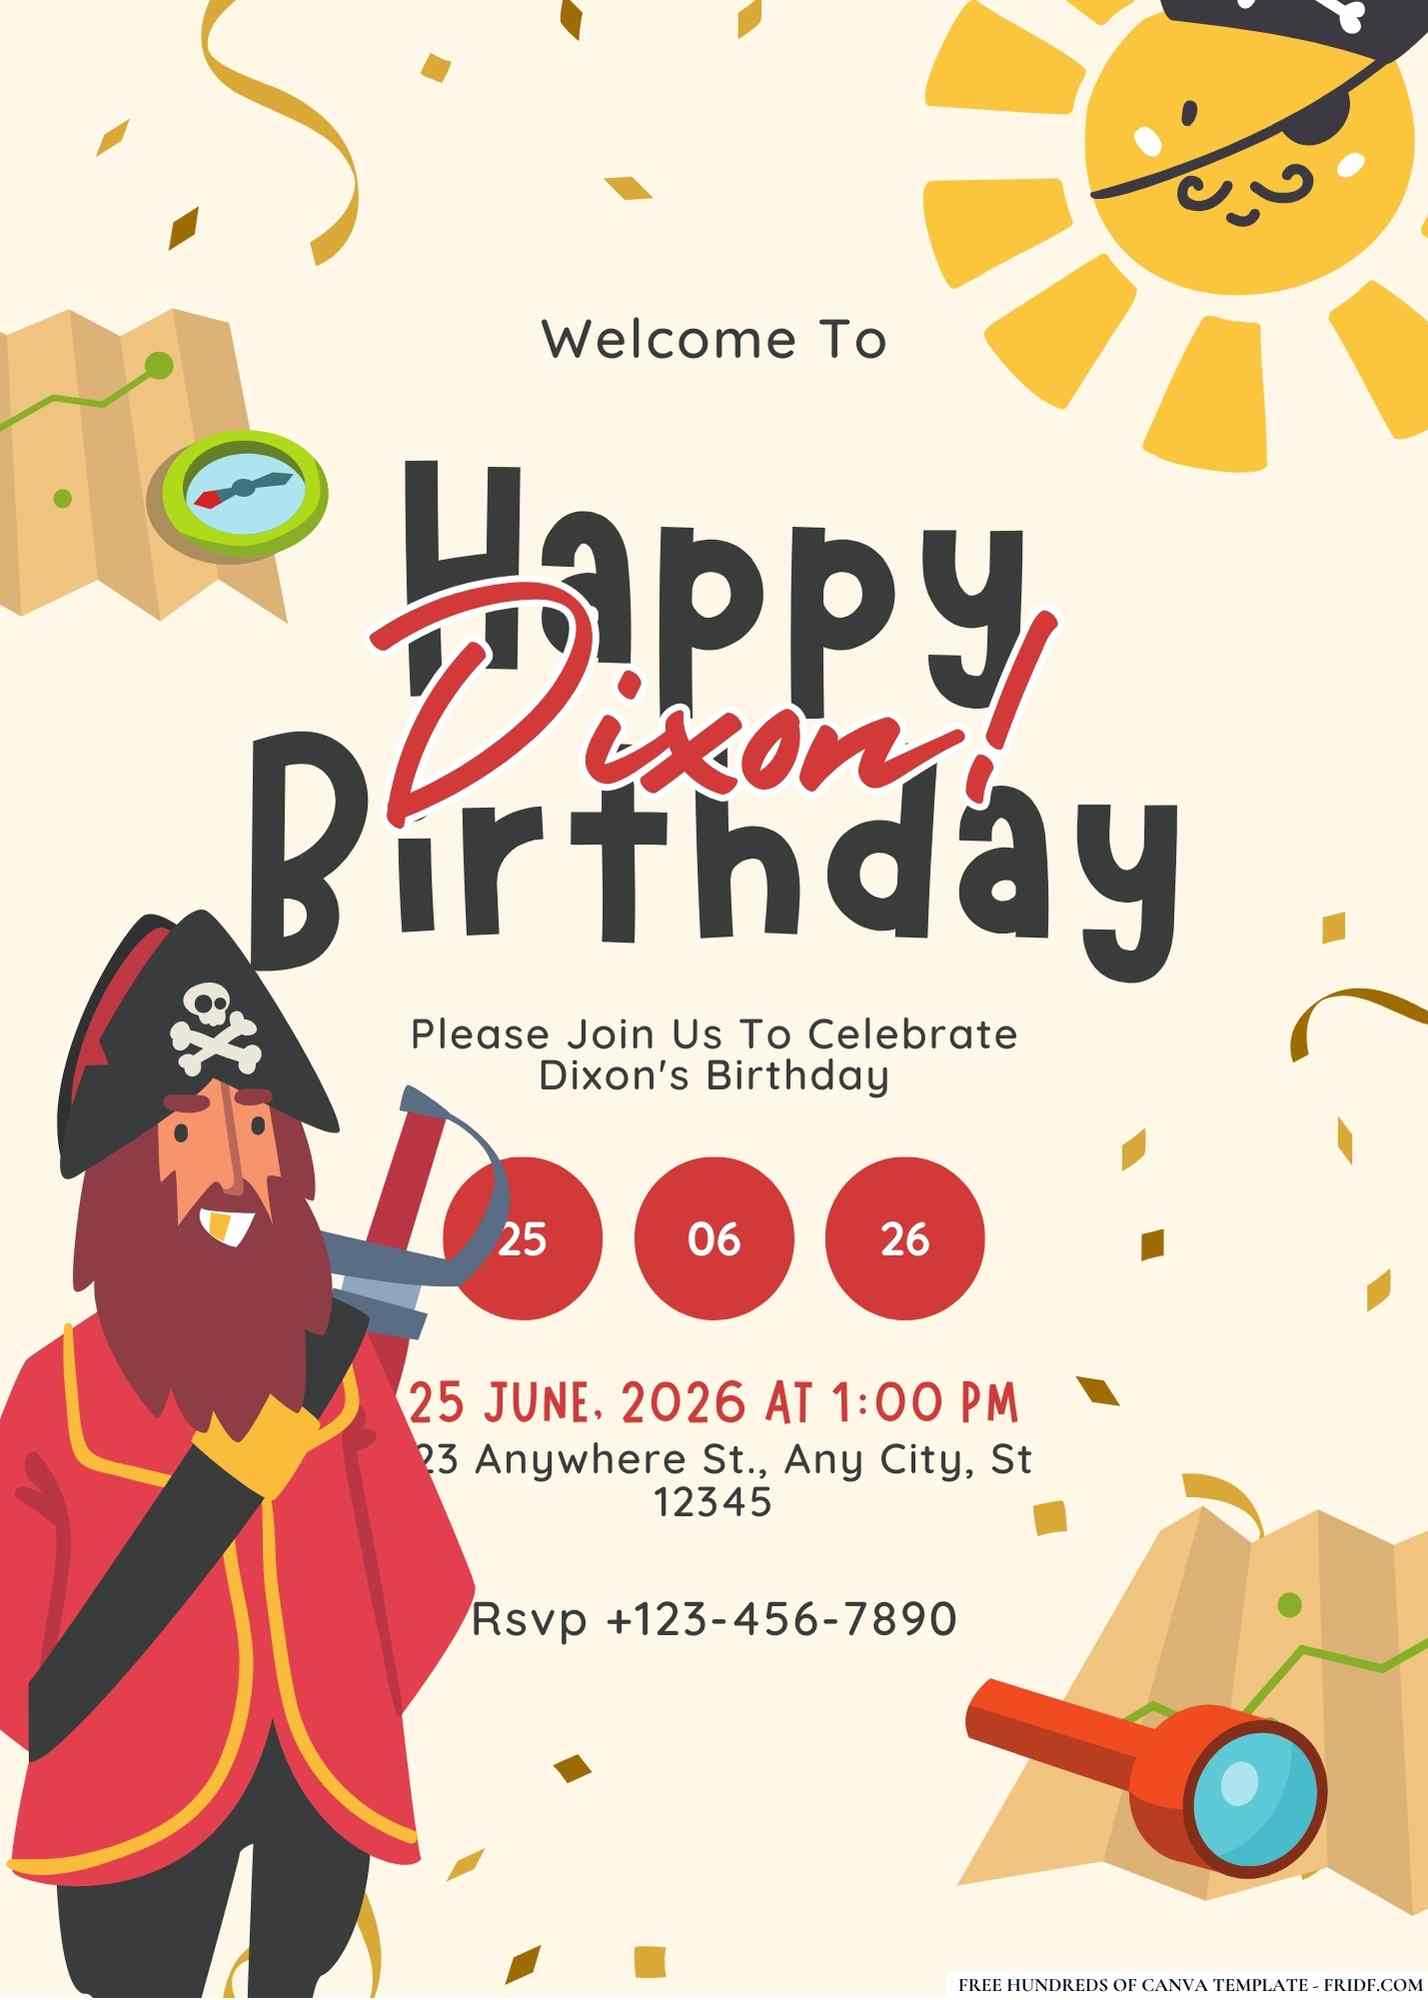 Pirates and Treasure Hunt Birthday Invitation